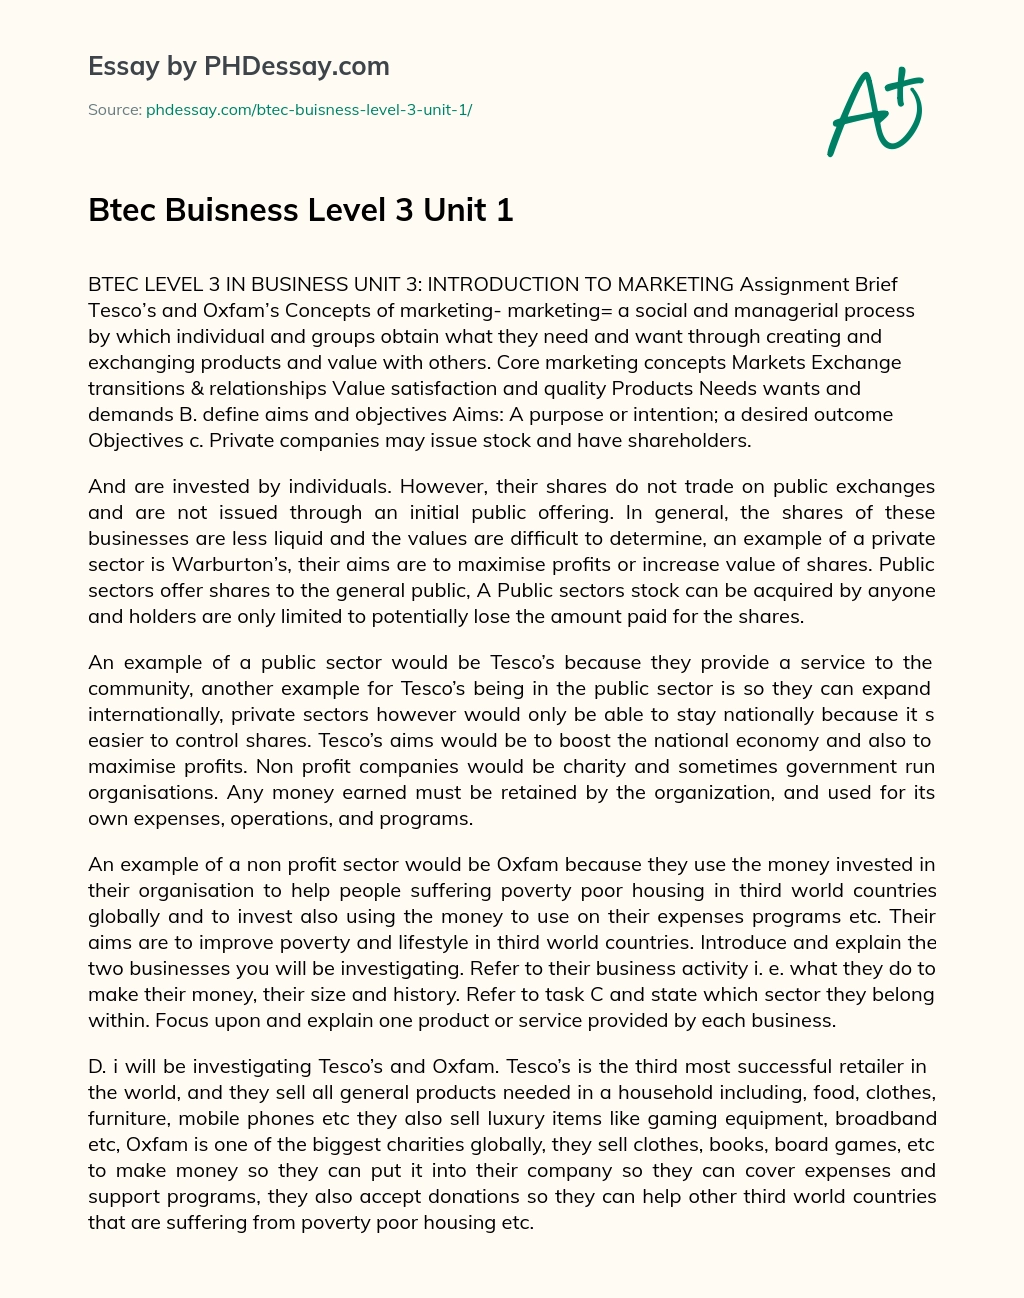 Btec Buisness Level 3 Unit 1 essay